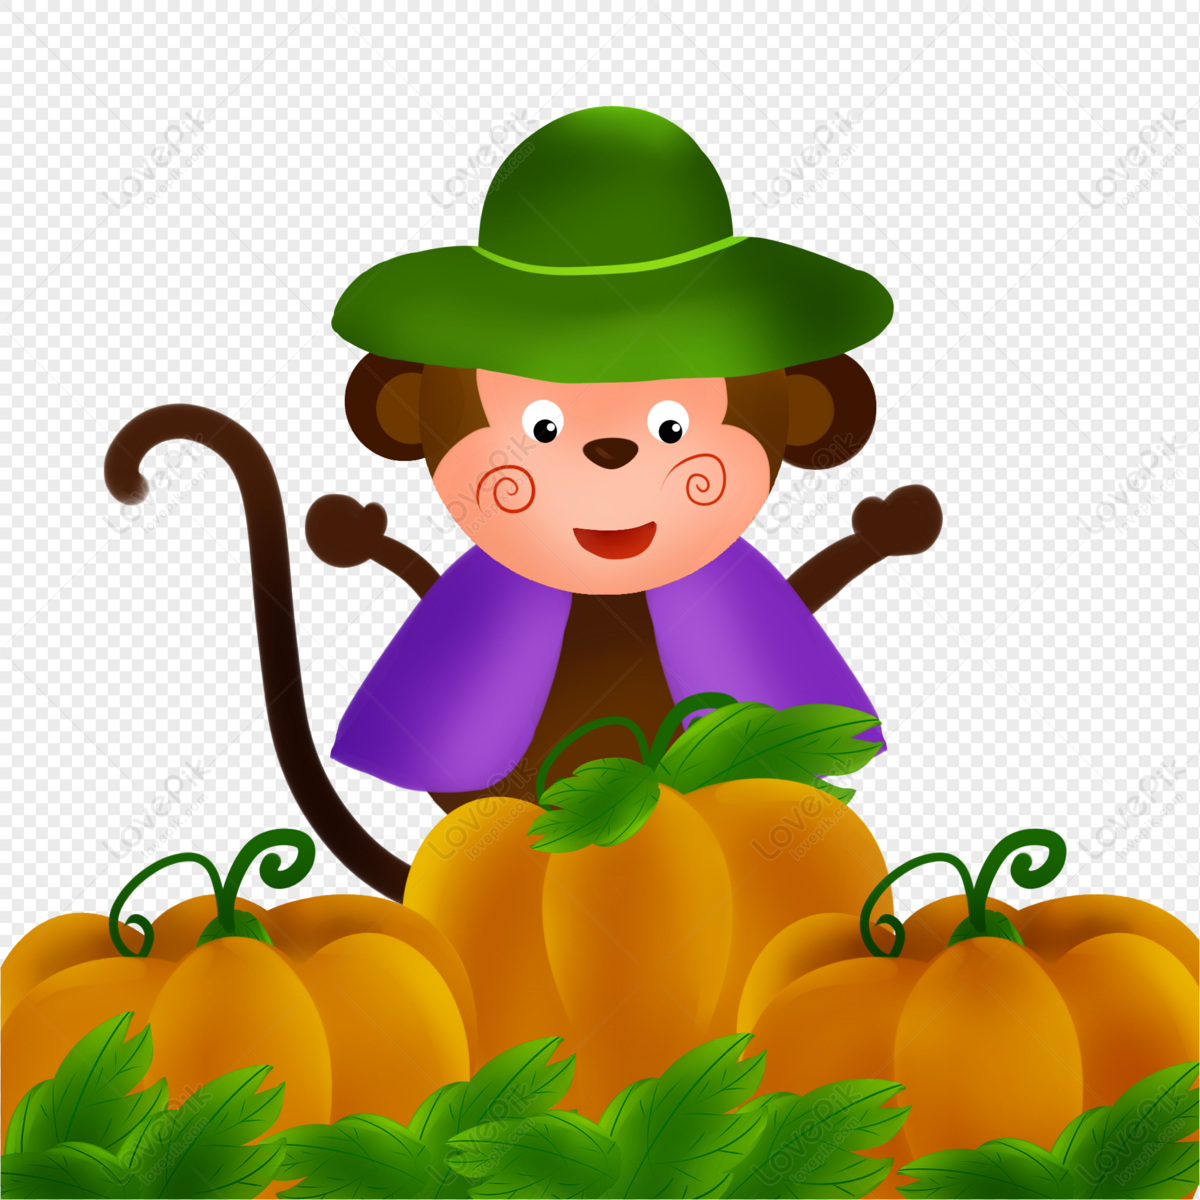 Halloween Illustration Of Cartoon Monkey With Pumpkin Royalty Free ...